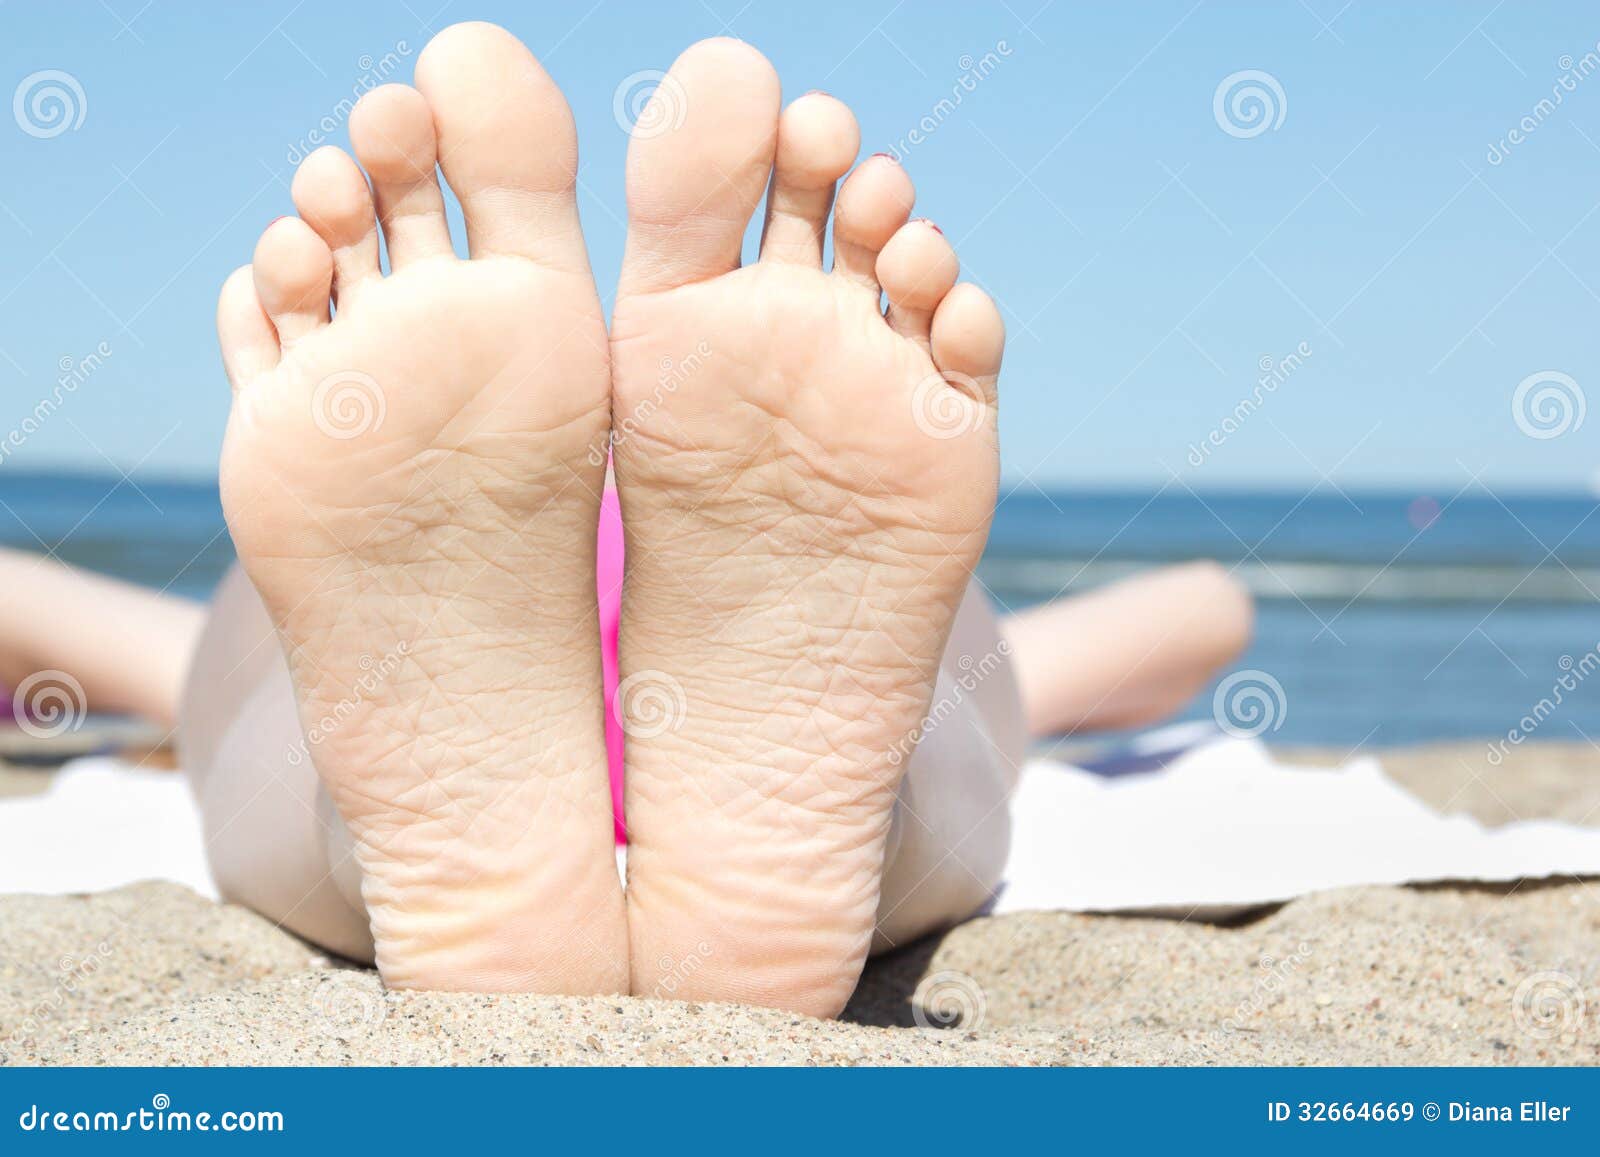 Female Feet On The Beach Near The Sea Stock Image Image Of Beach